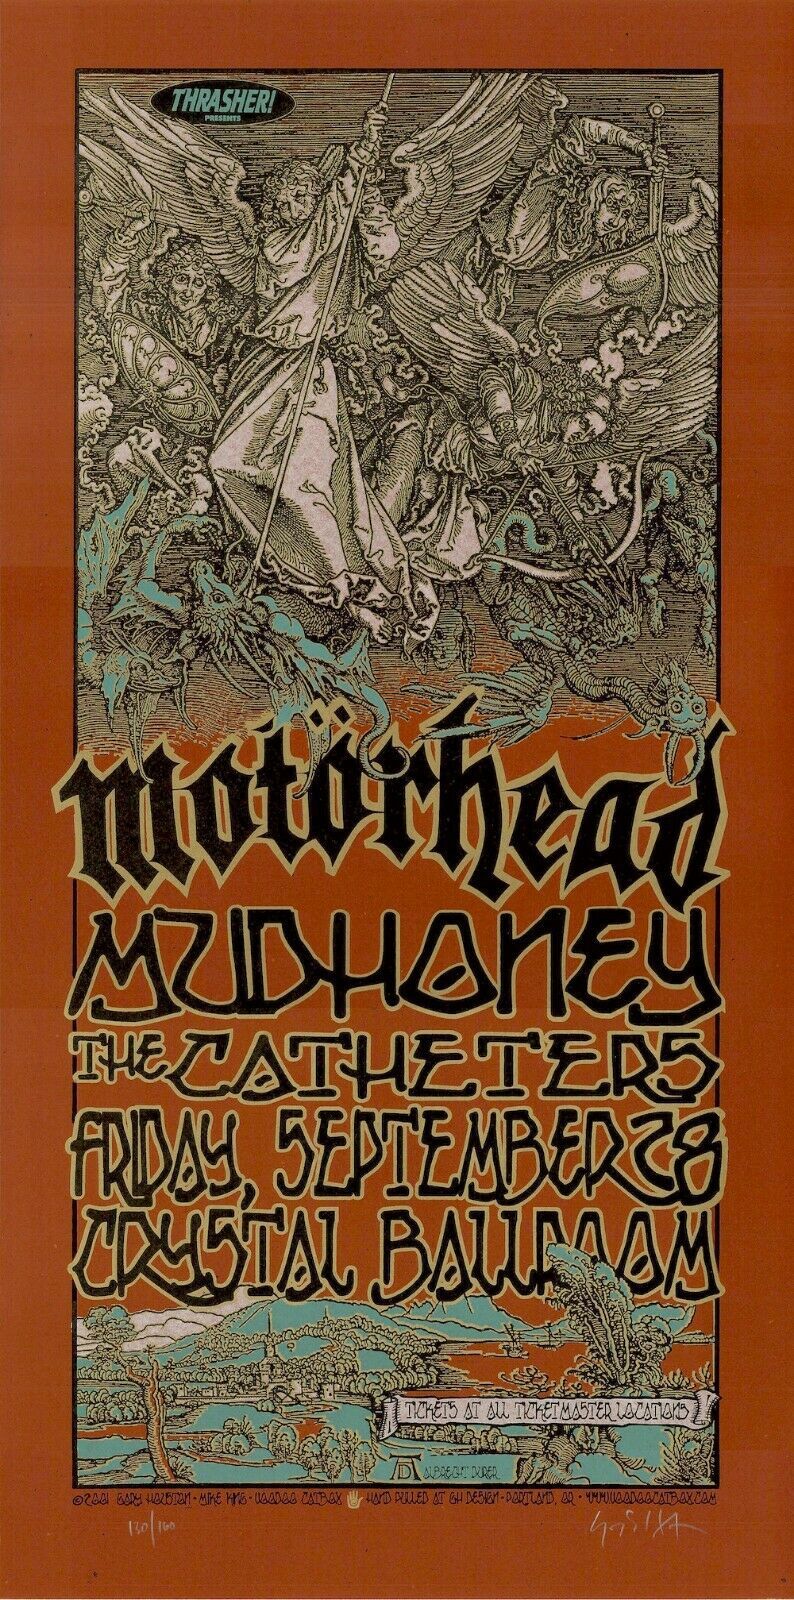 Motorhead & Mudhoney Crystal Ballroom 2003 Concert Poster